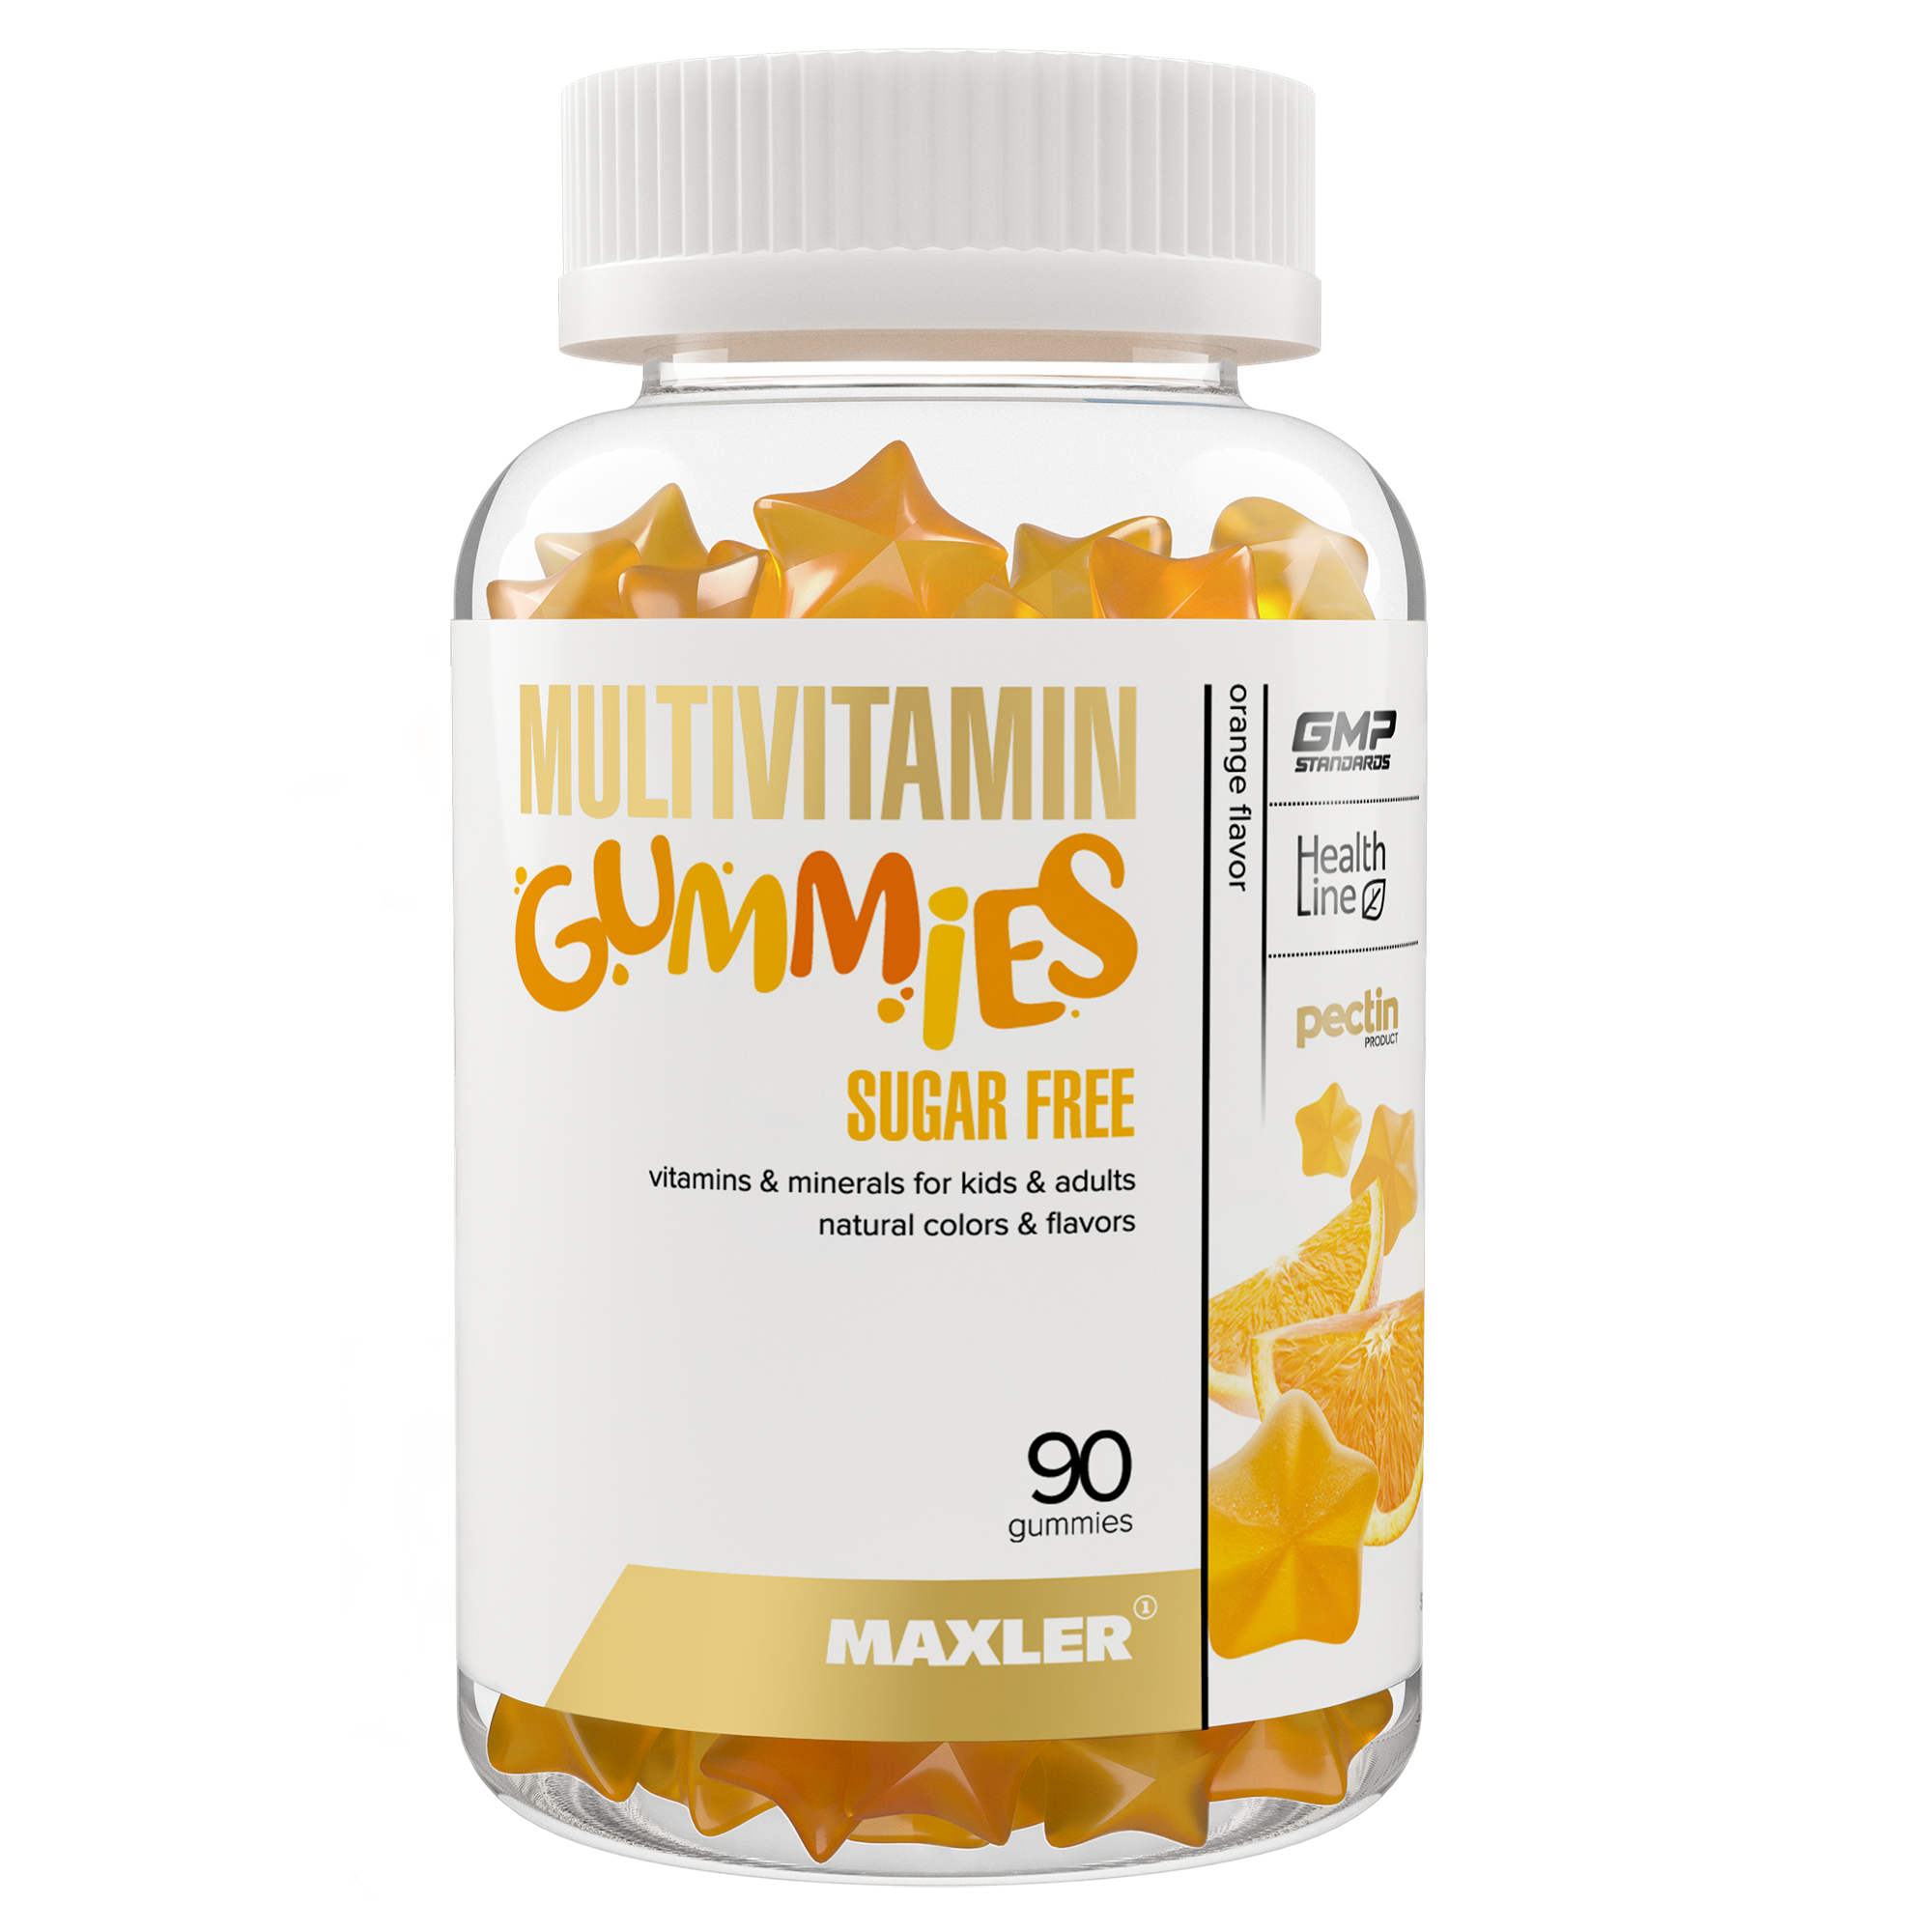 Мультивитамин без сахара для детей от 4-х лет Maxler Gummies Sugar Free 90 шт - Апельсин